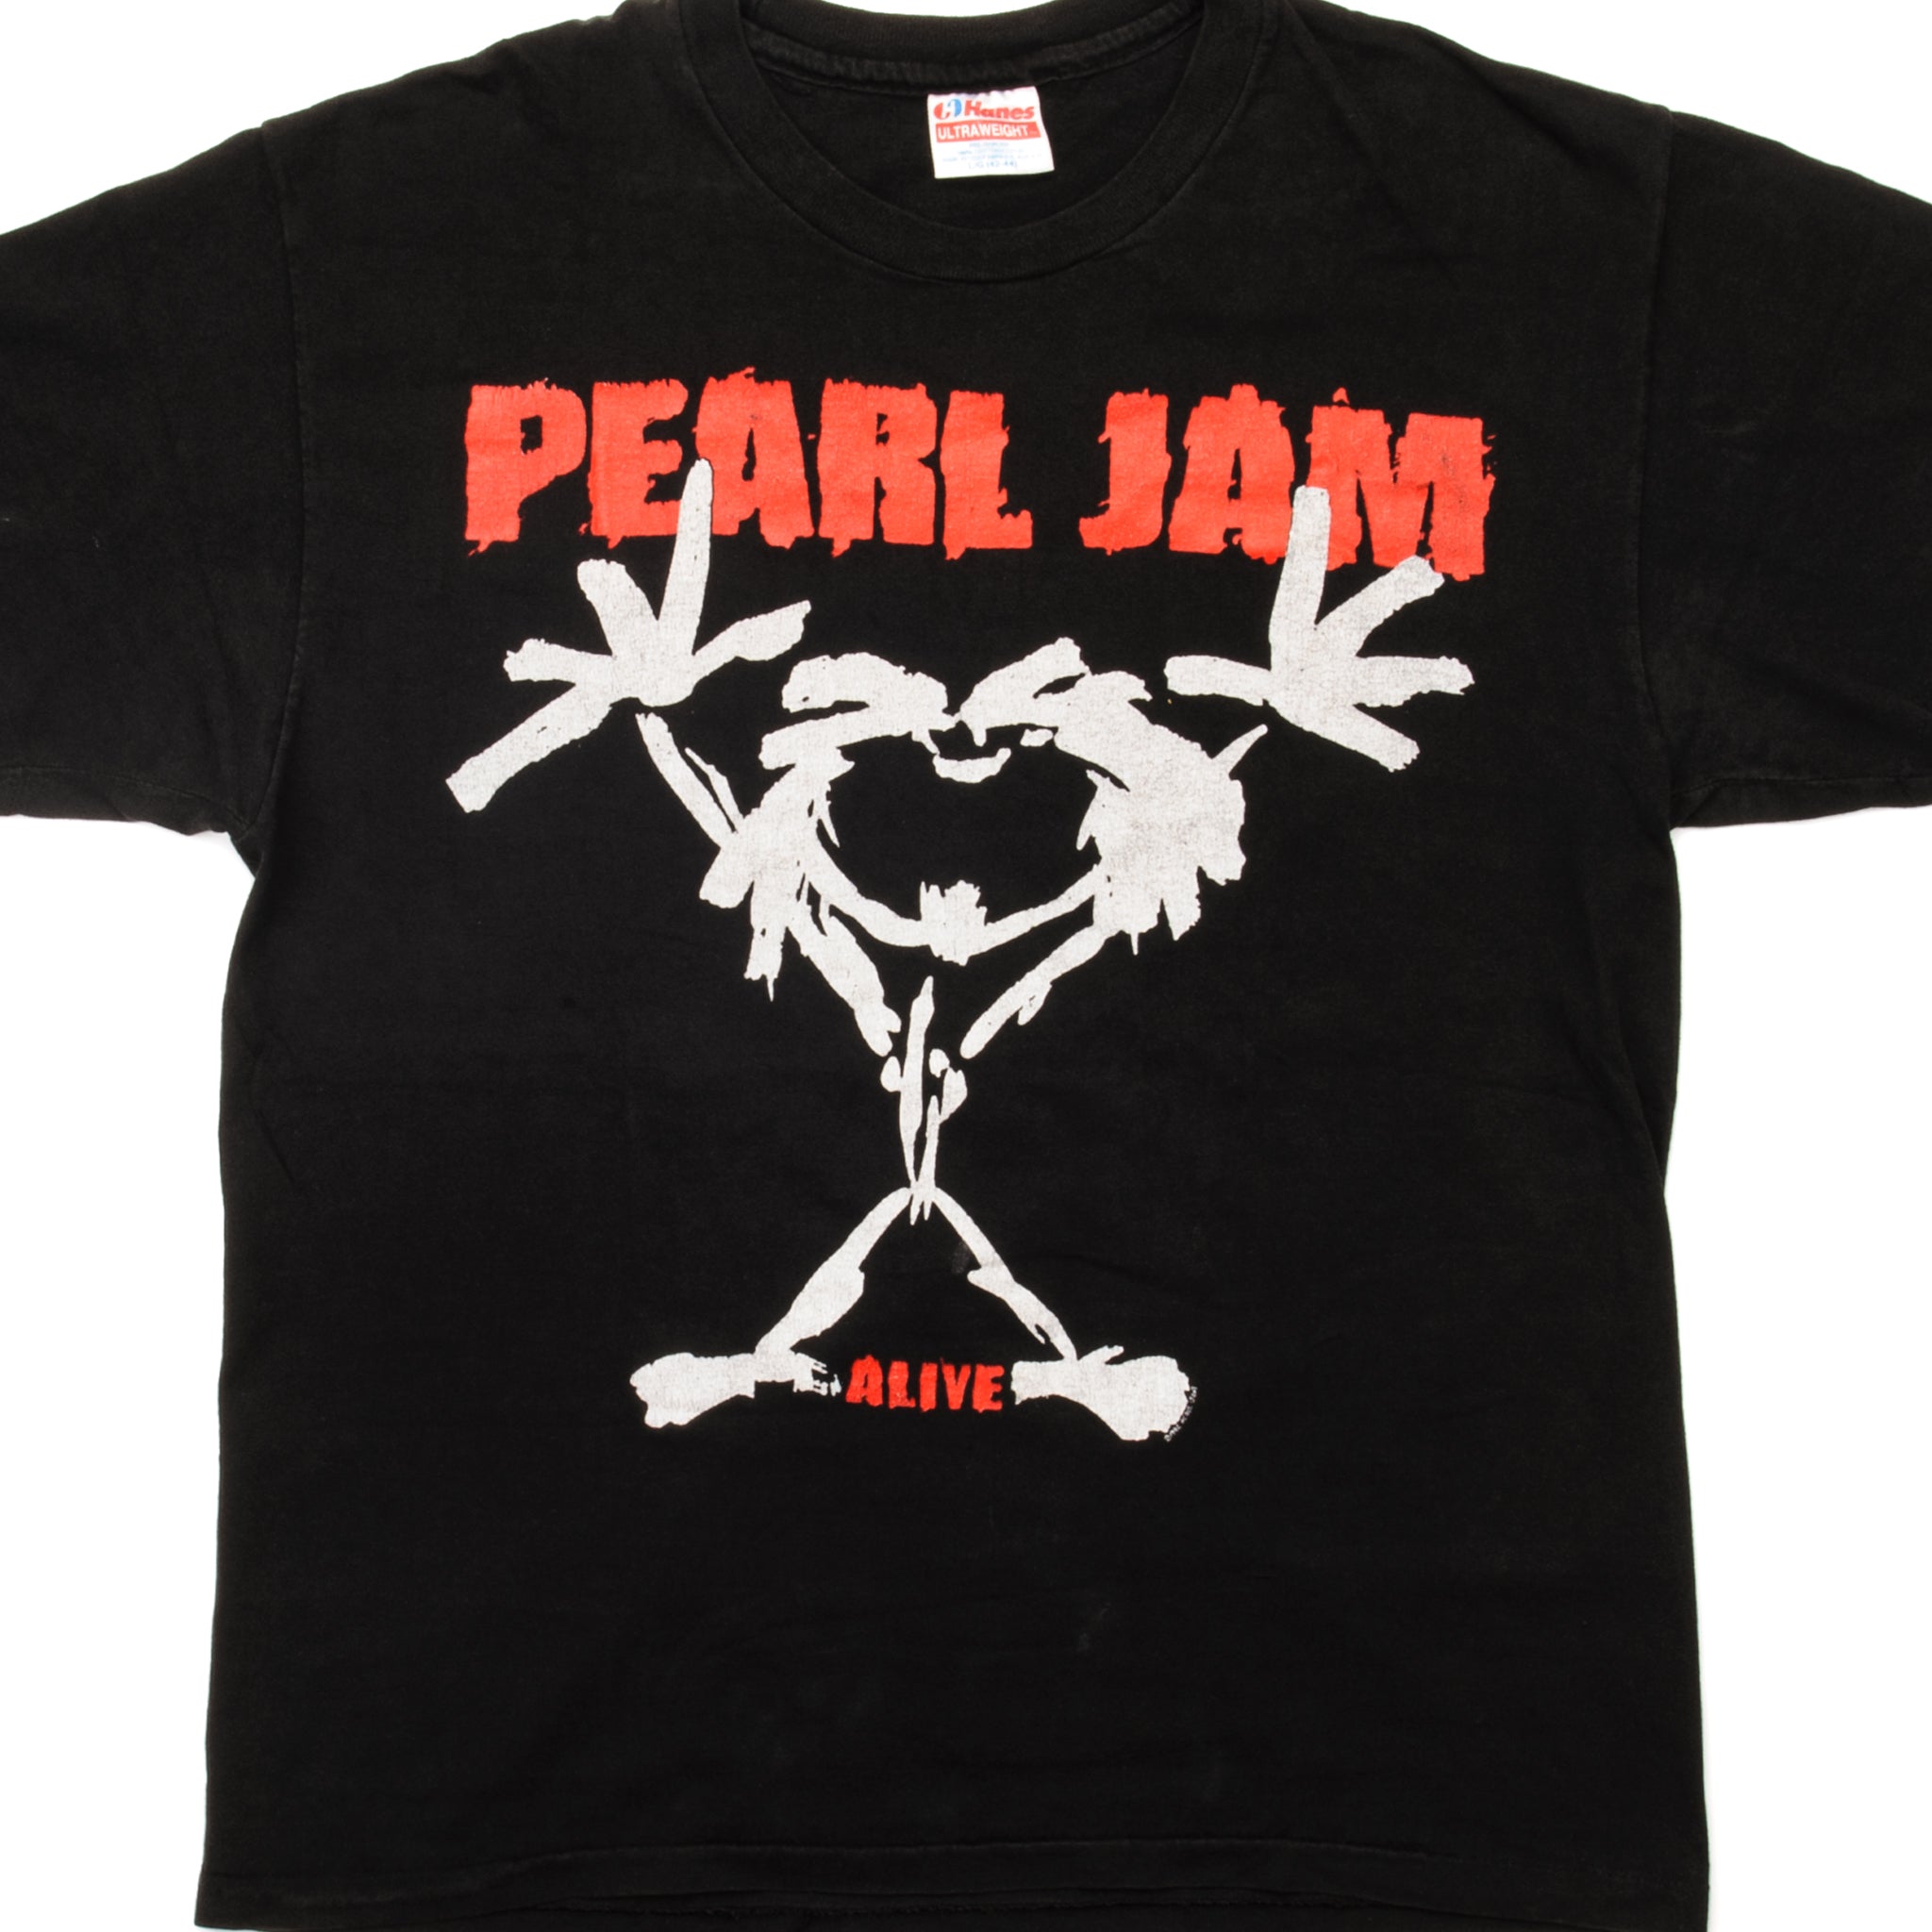 Music Vintage Pearl Jam Tee Shirt 1994 Size Medium Made in USA